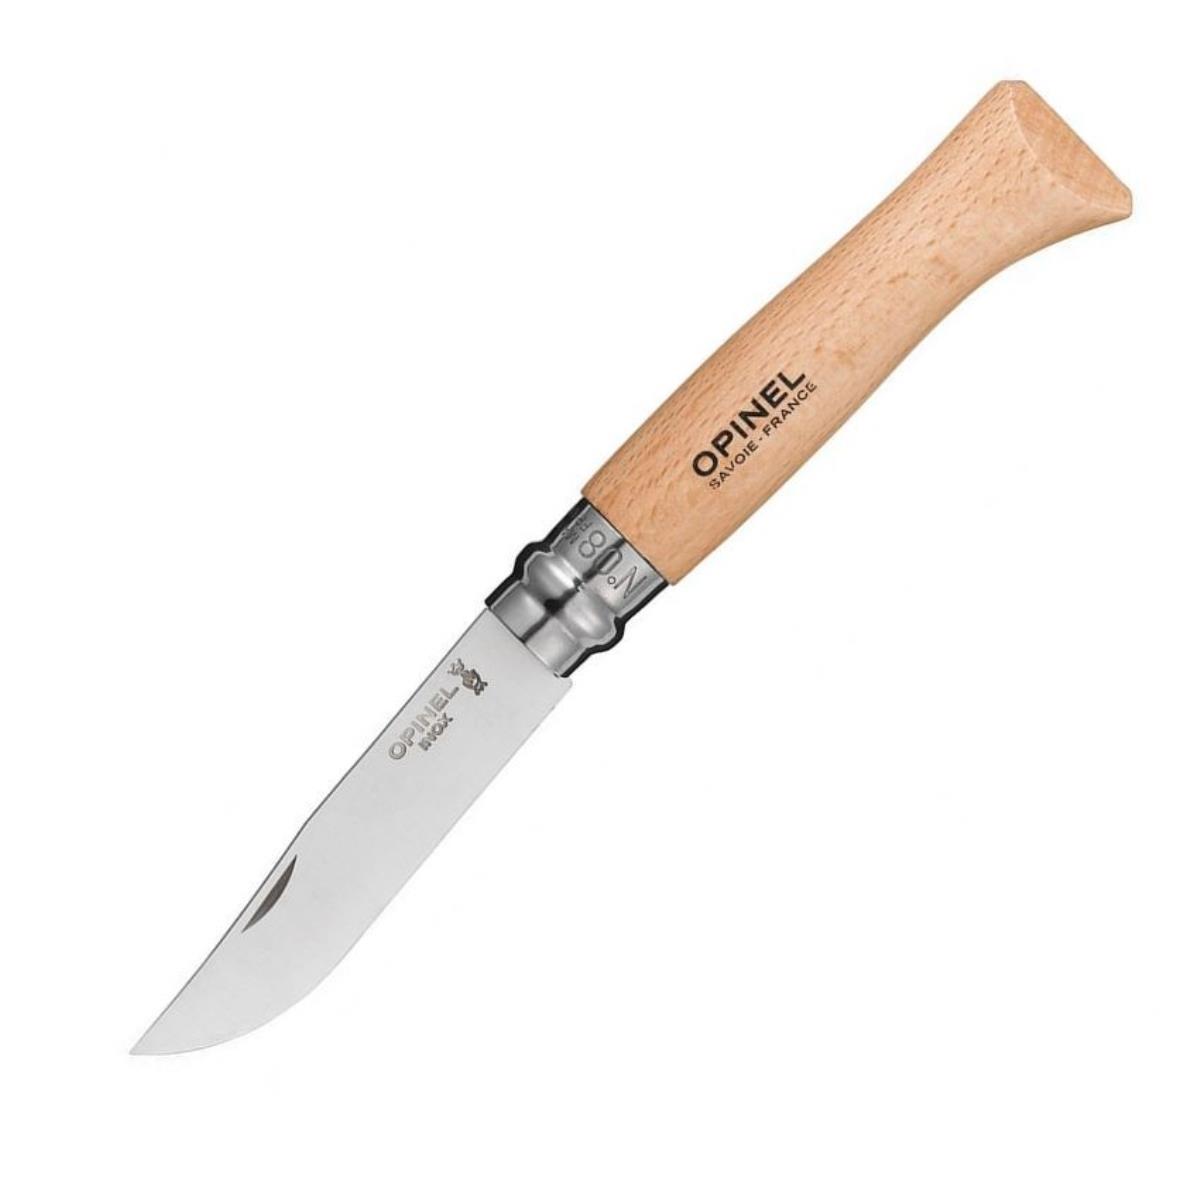 Нож №8 VRI Tradition Inox (нерж.сталь, рукоять бук, длина клинка 8,5 см) 1230805 OPINEL нож бабочка балисонг буратино сталь 420 рукоять металл